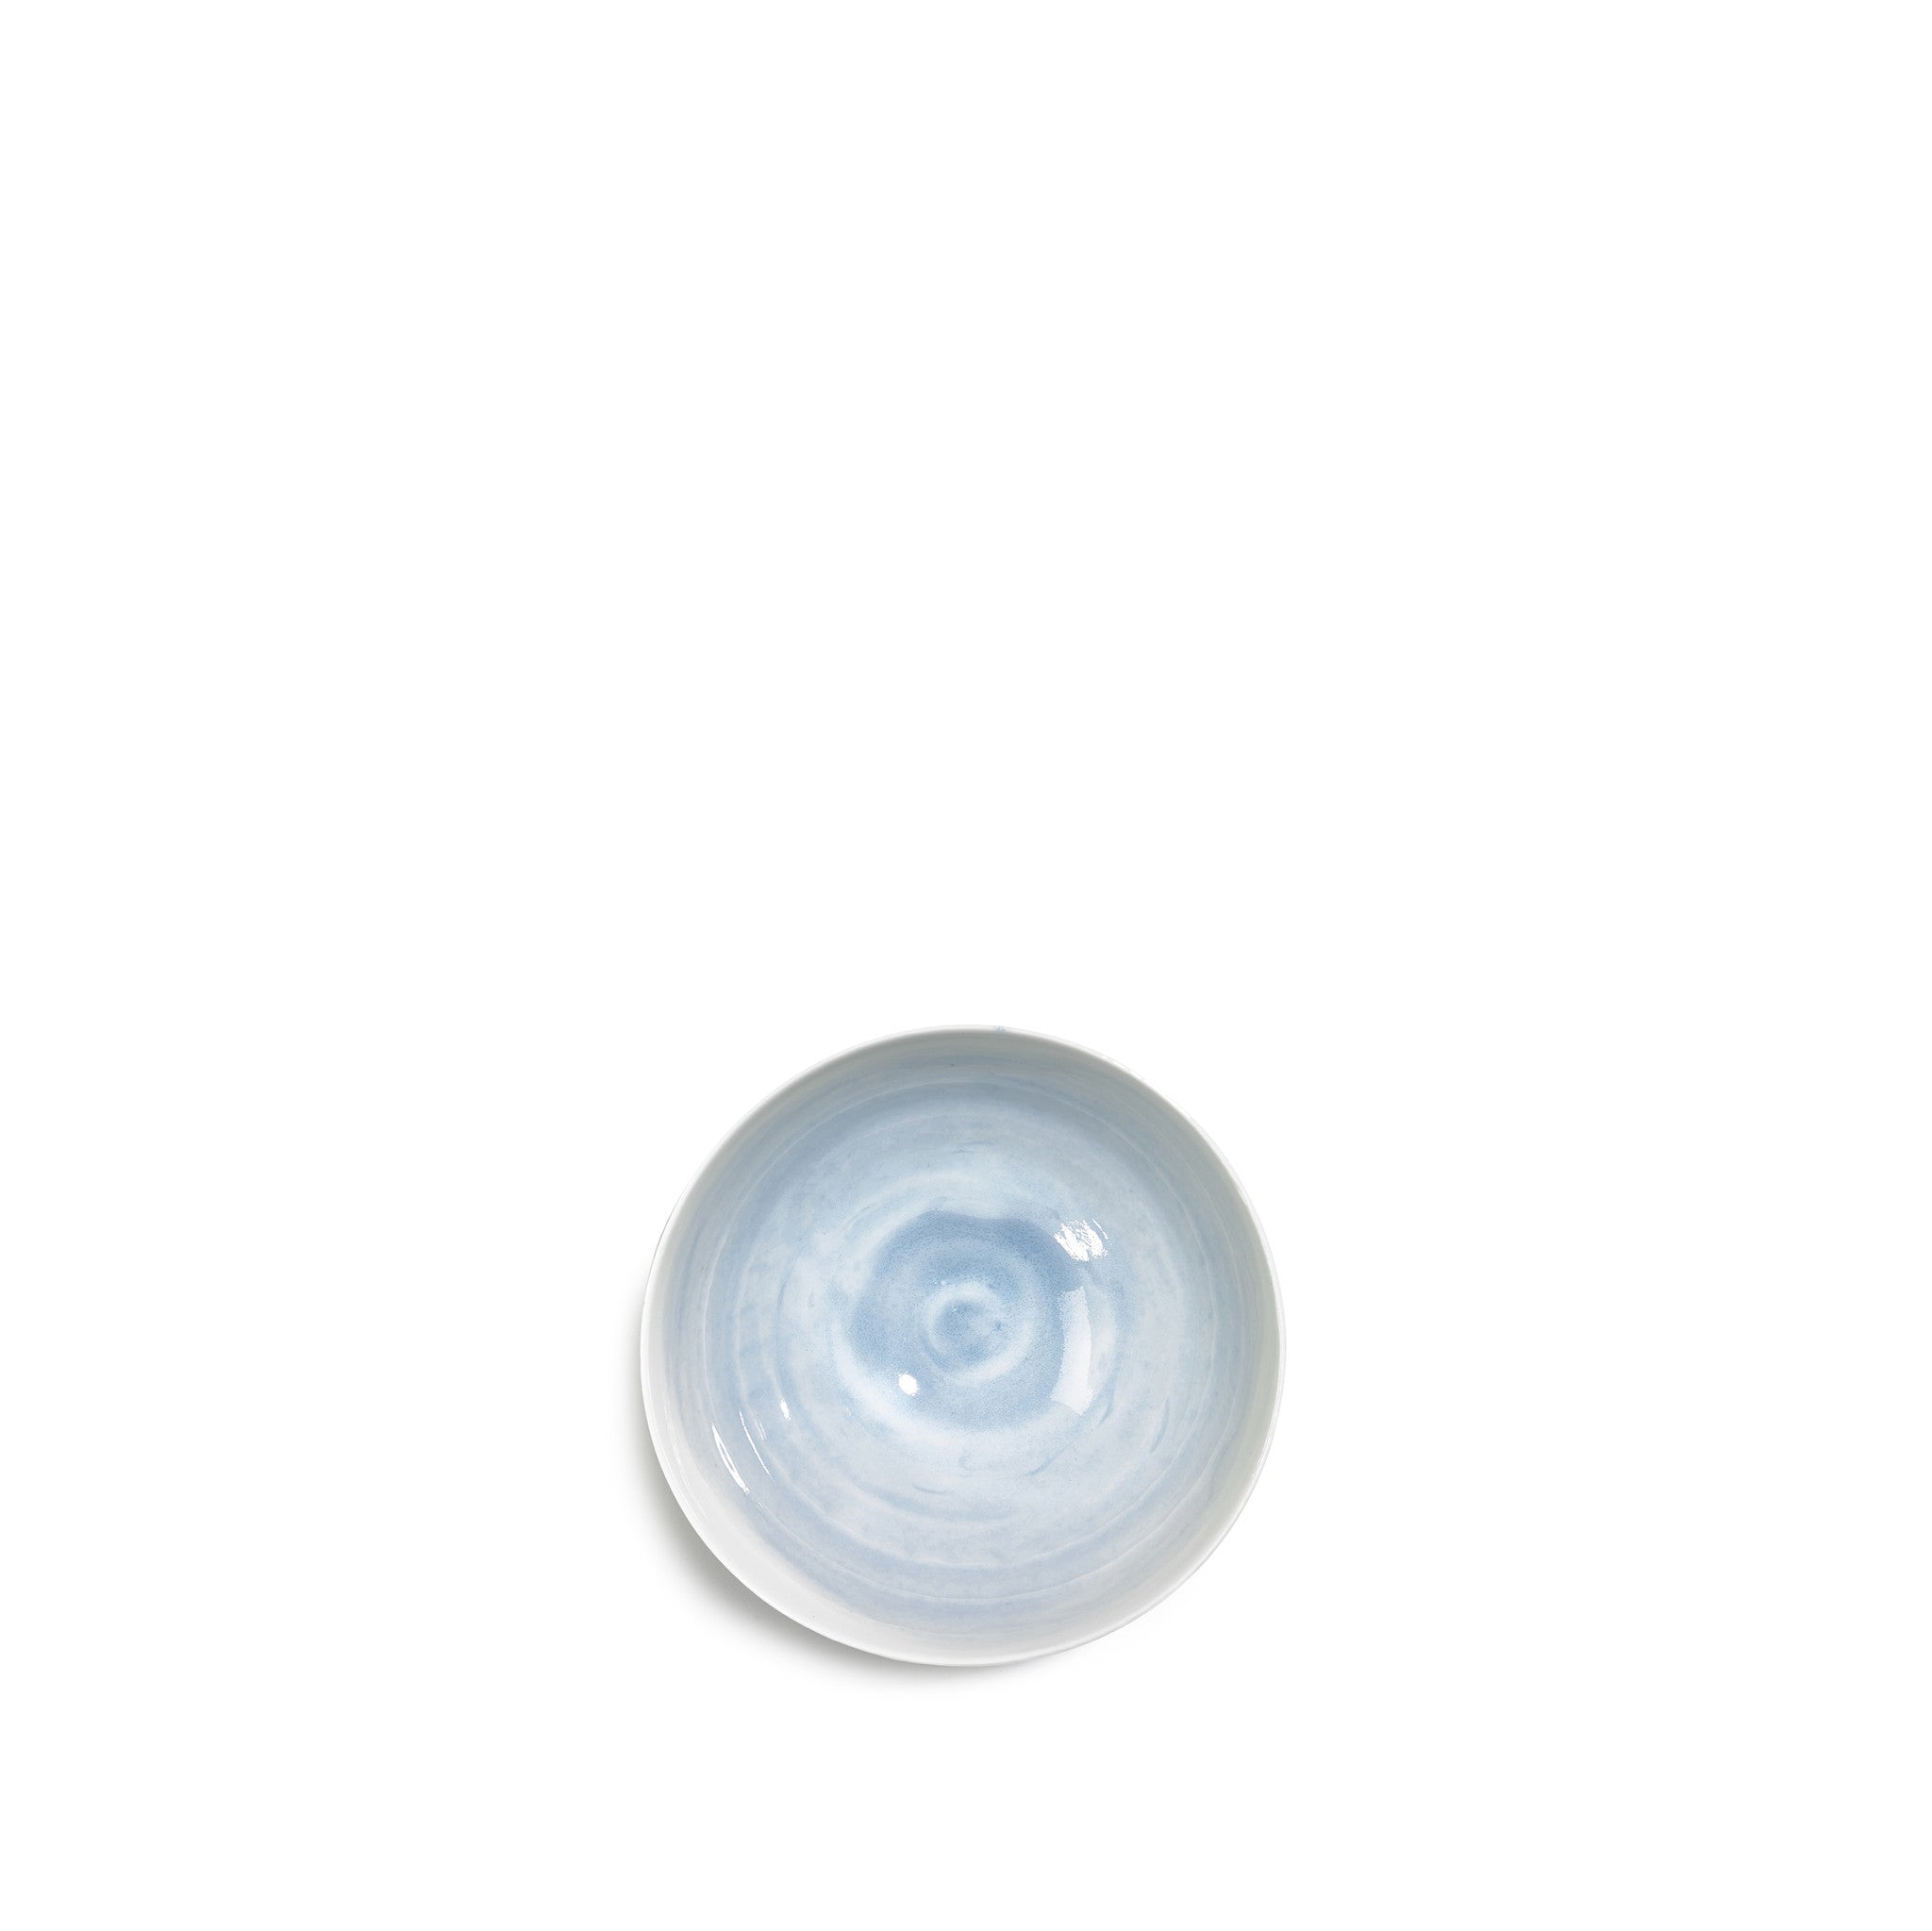 Small Light Blue Ceramic Bowl with White Edge, 8cm